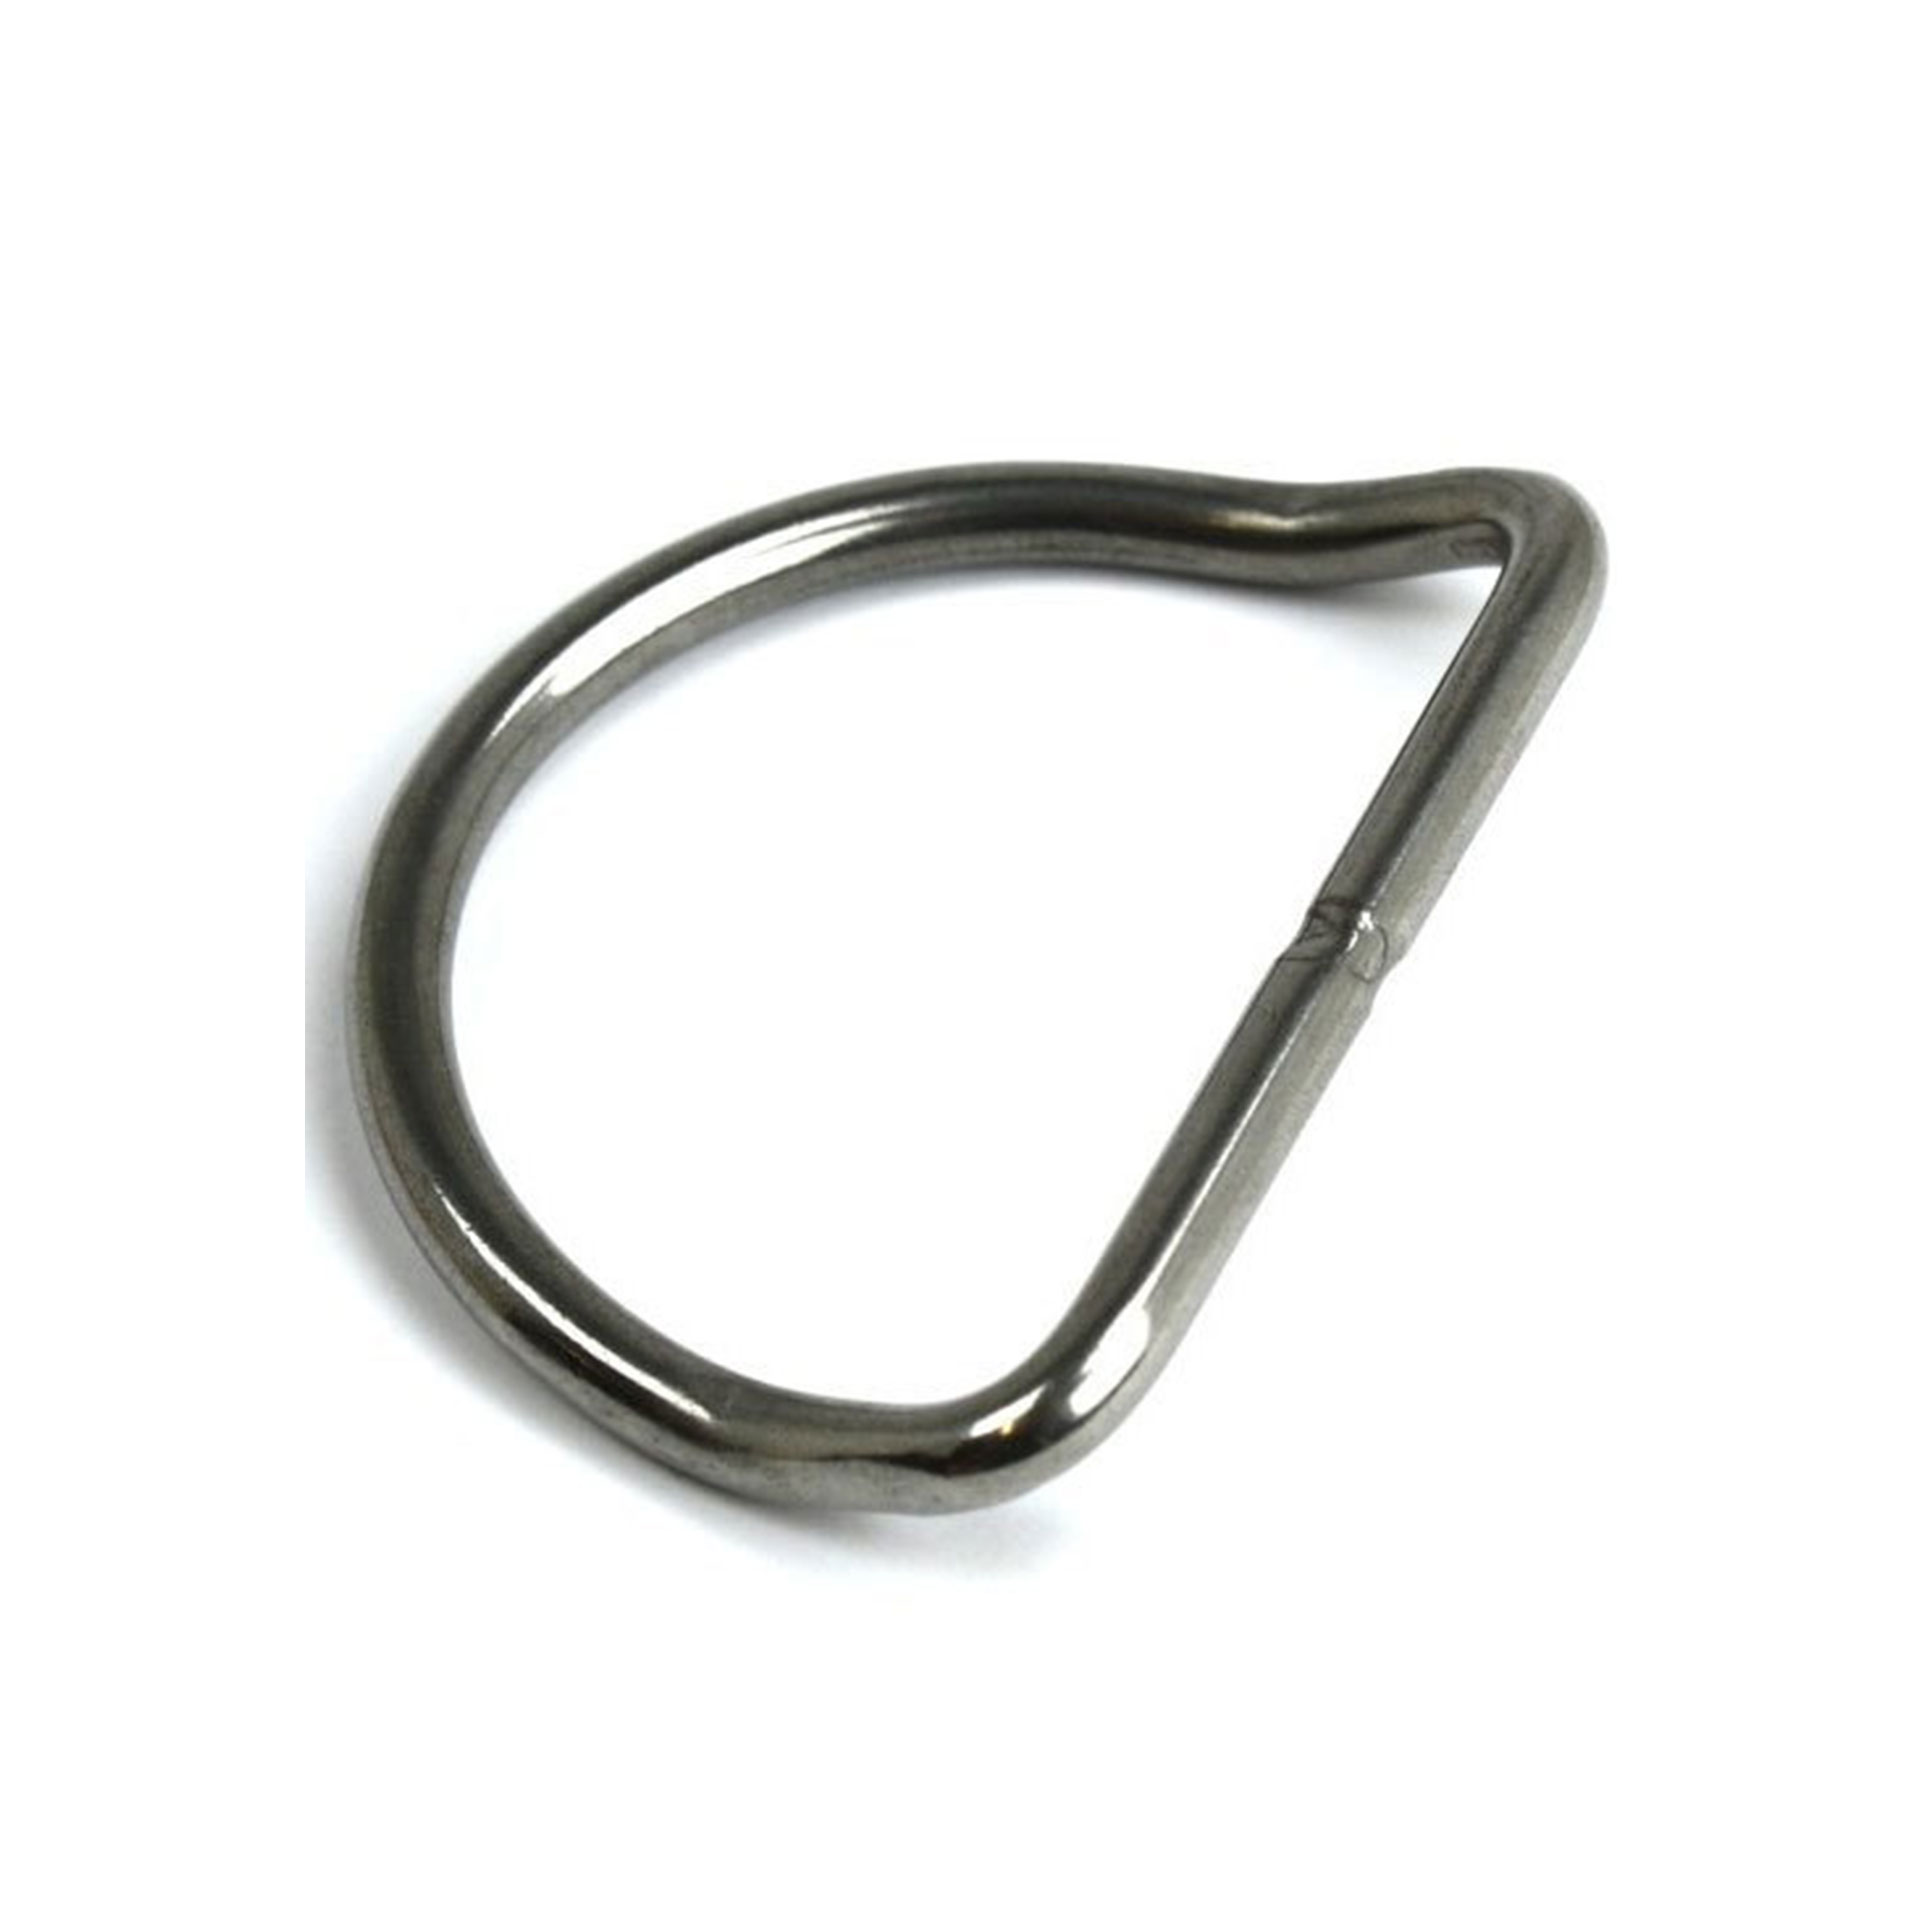 D-Ring Bent (5 CM / 2 IN)